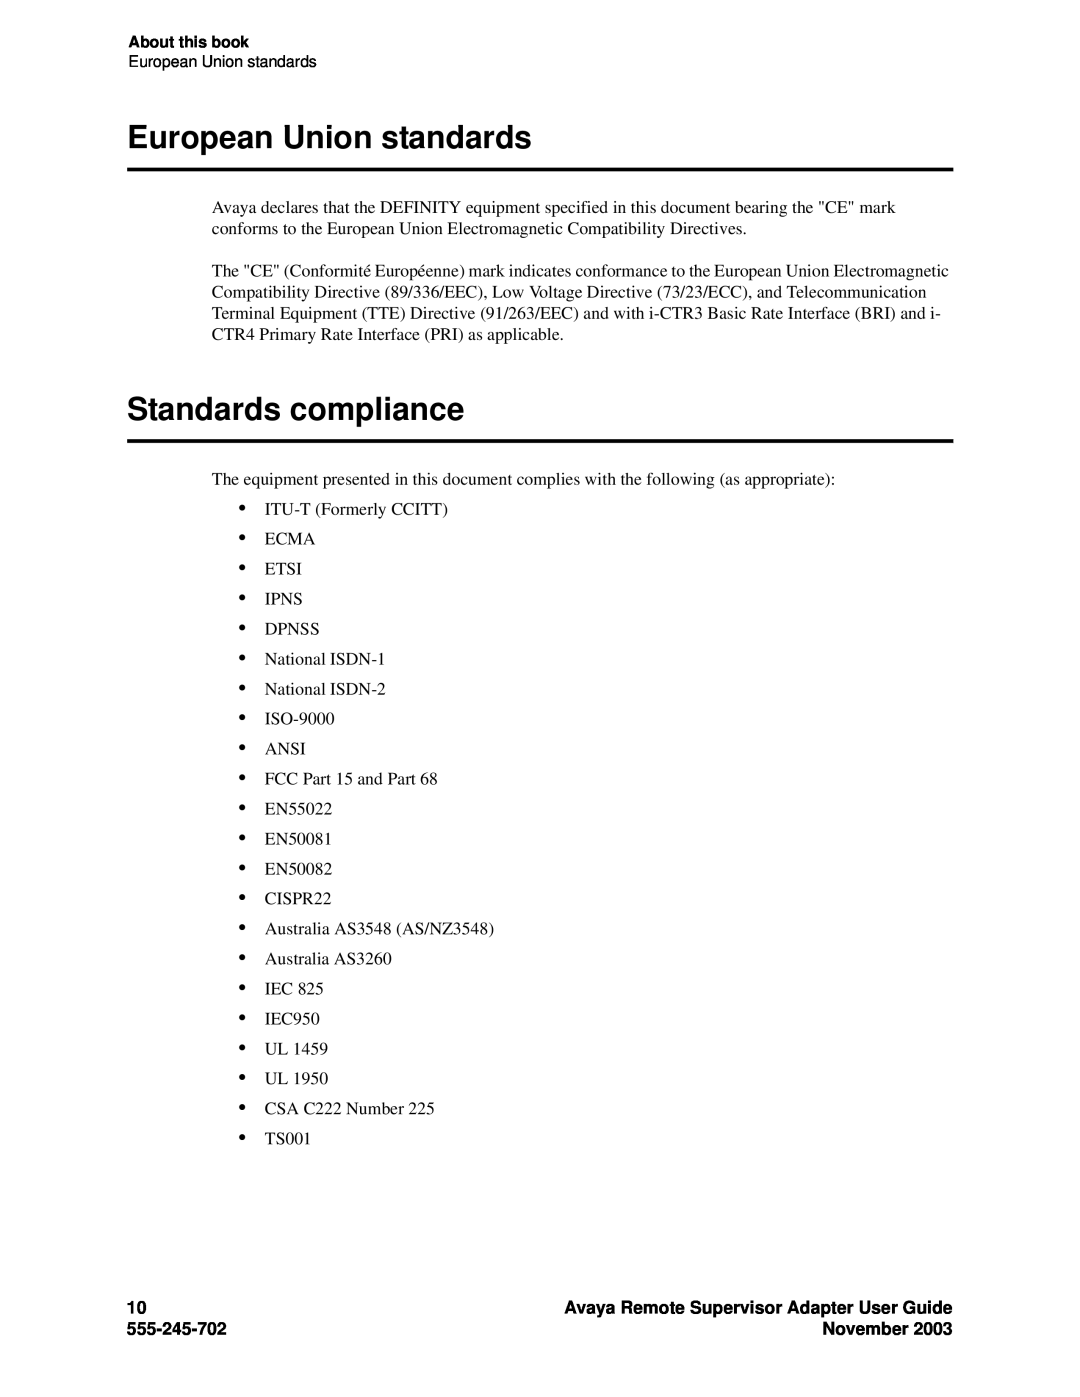 Avaya S8500 manual European Union standards, Standards compliance, Avaya Remote Supervisor Adapter User Guide, 555-245-702 